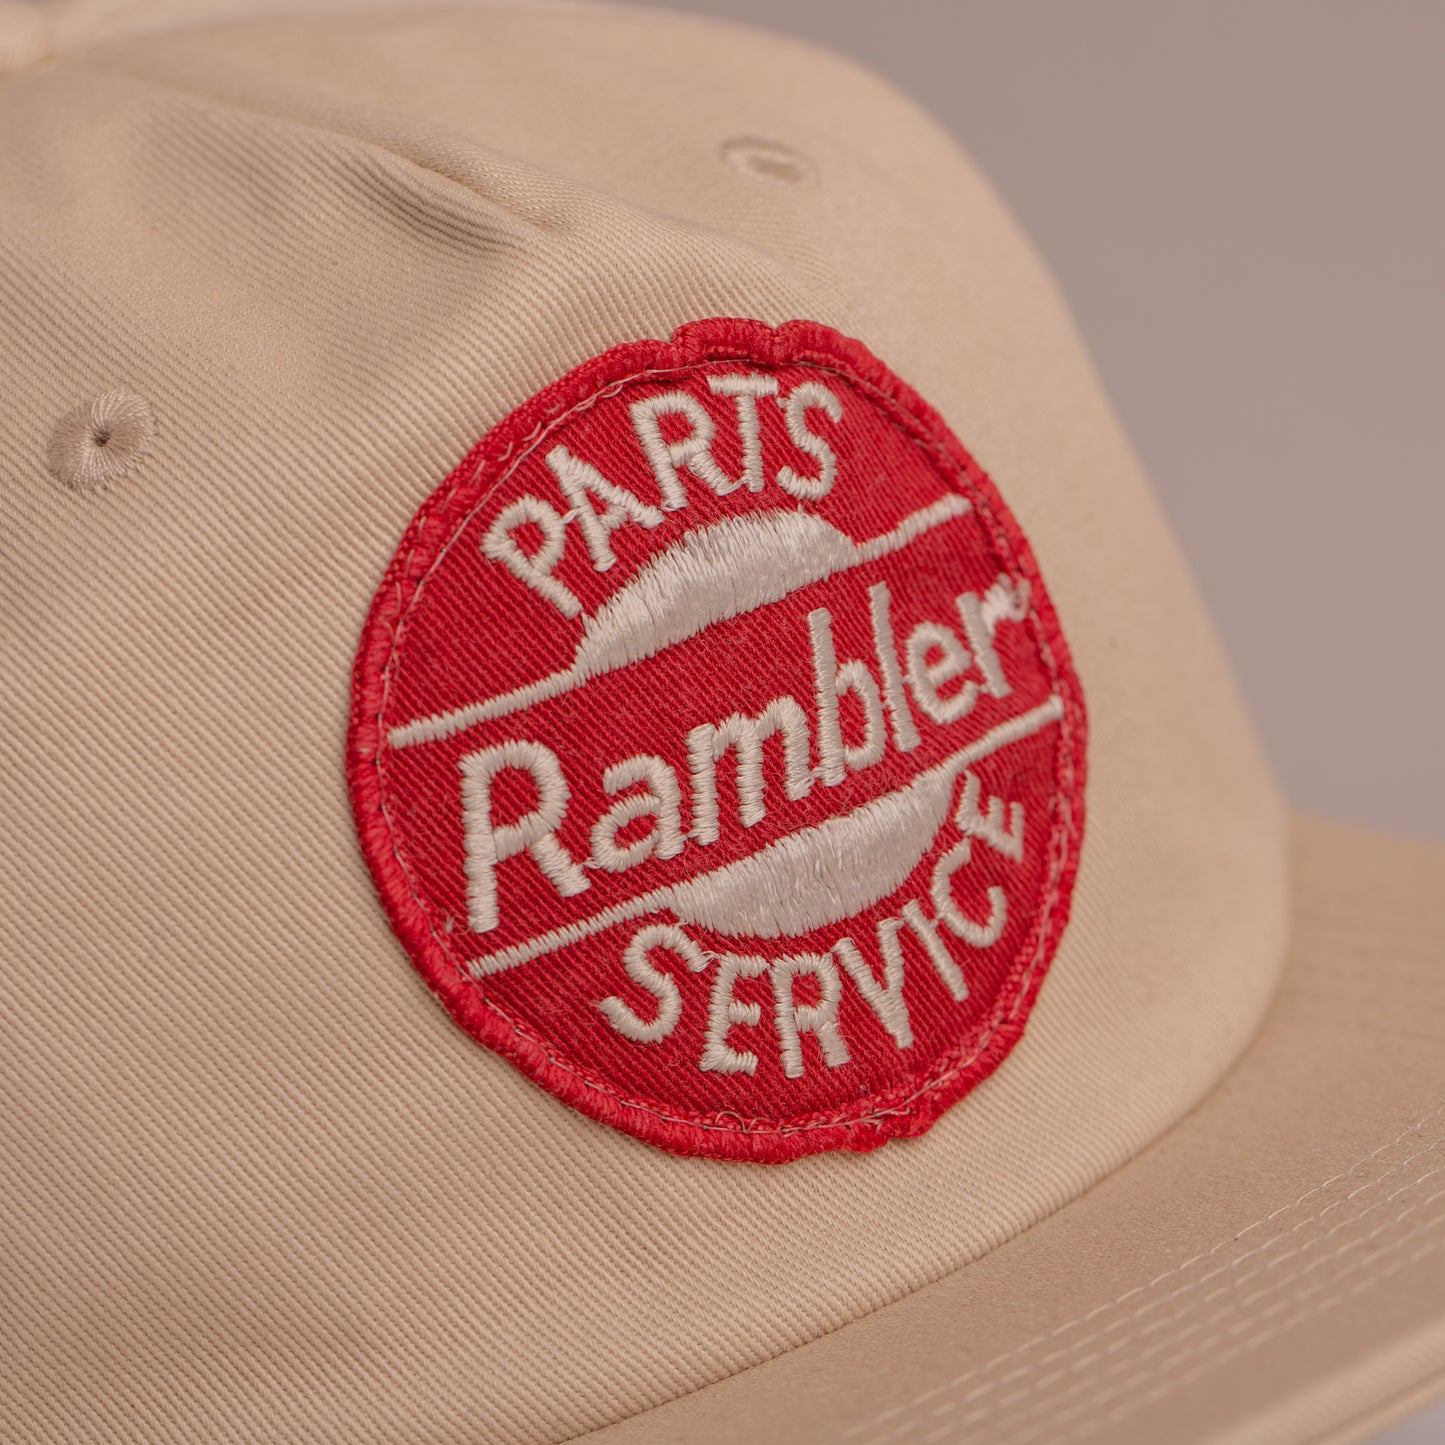 Rambler Parts Service